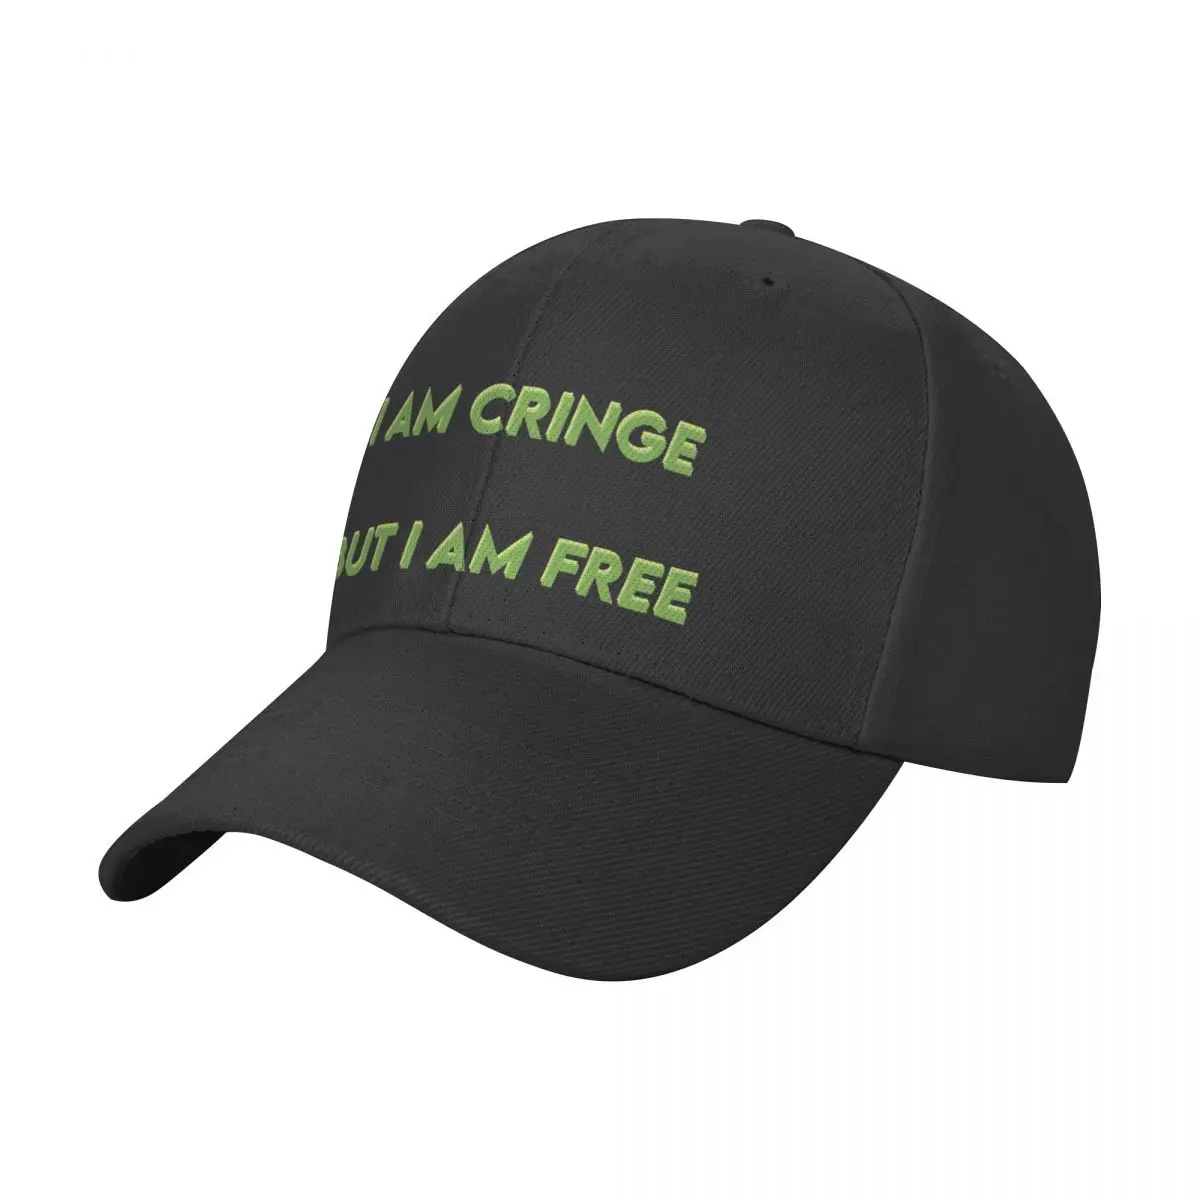 

i am cringe but i am free Baseball Cap Custom Cap hard hat Women's Beach Men's